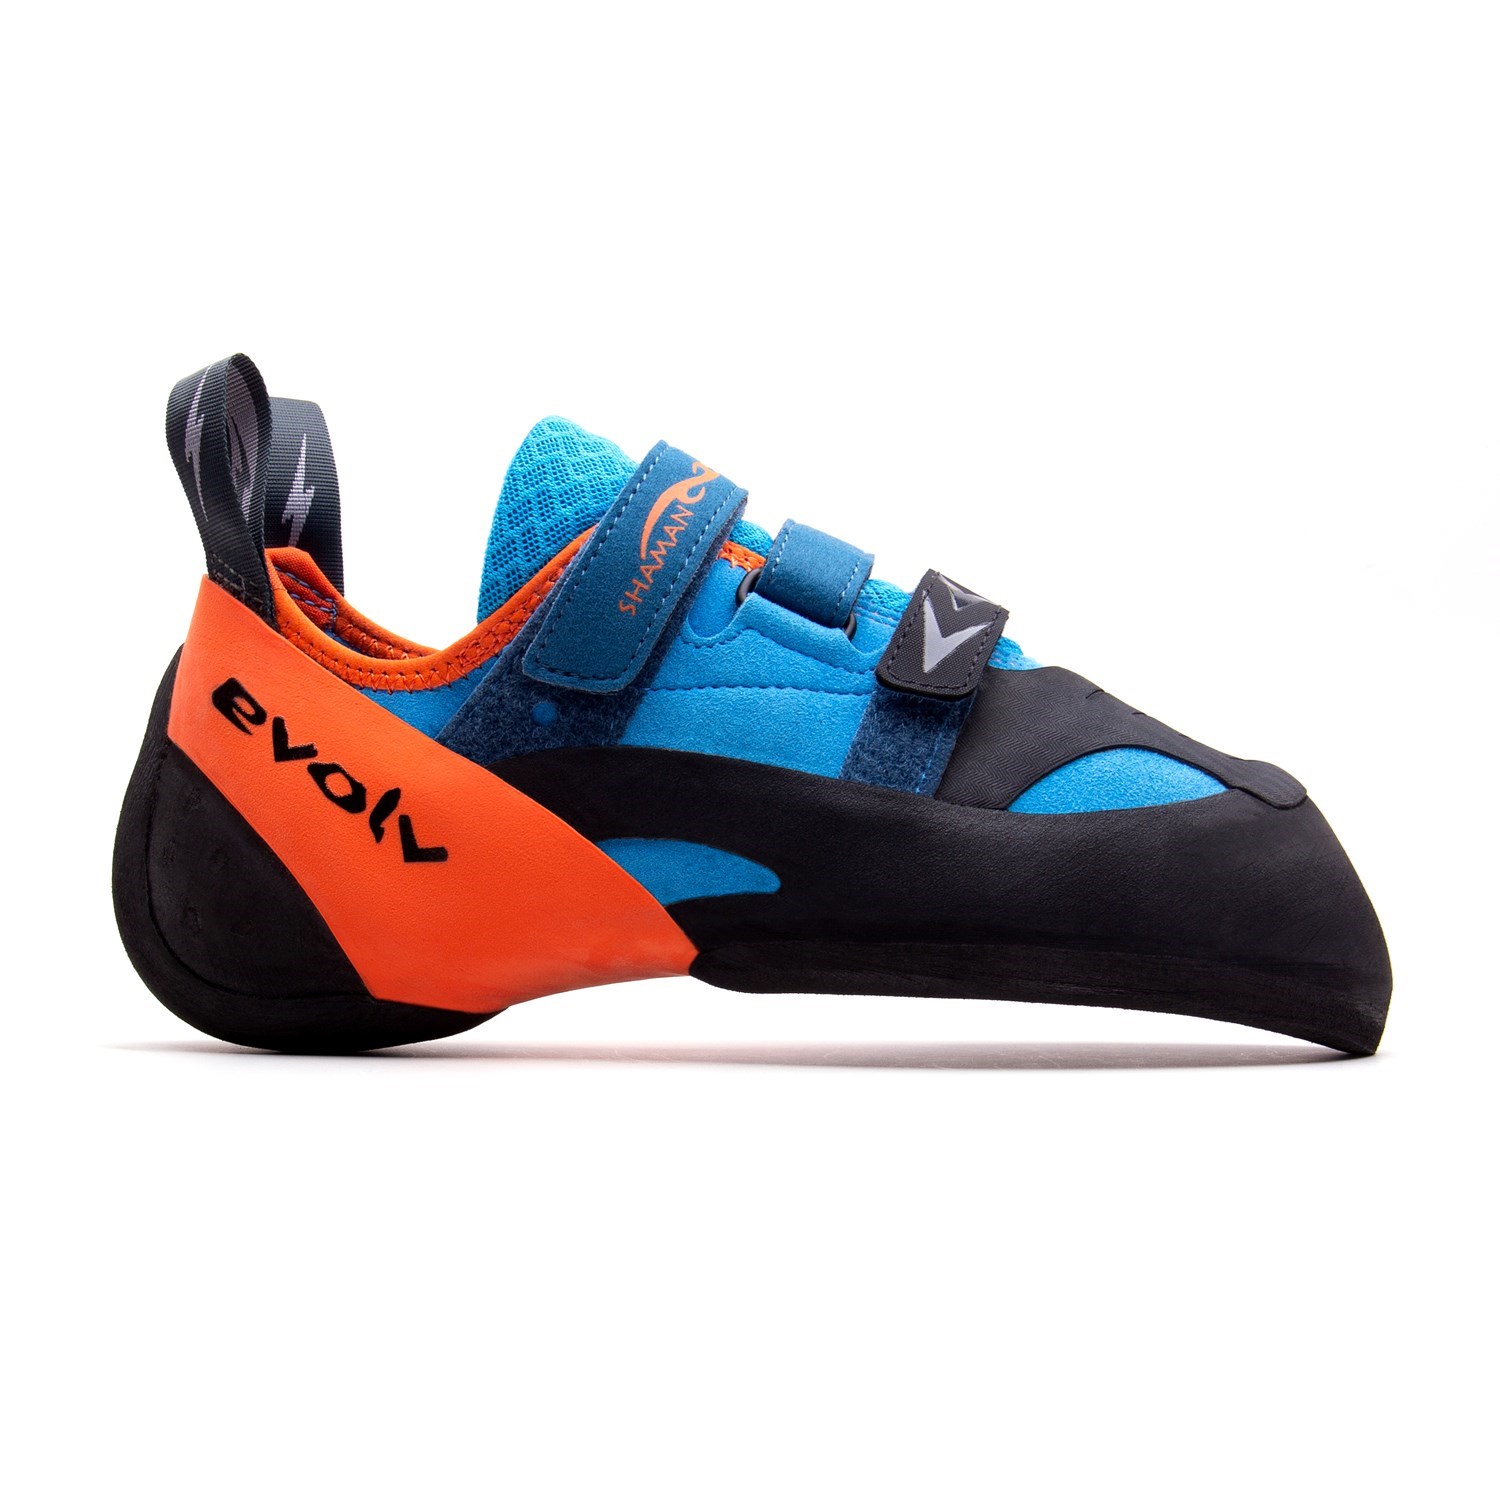 Details about   Mens Evolv Shaman US Size 5.5 Orange Blue Climbing Shoes UK Size 4.5 